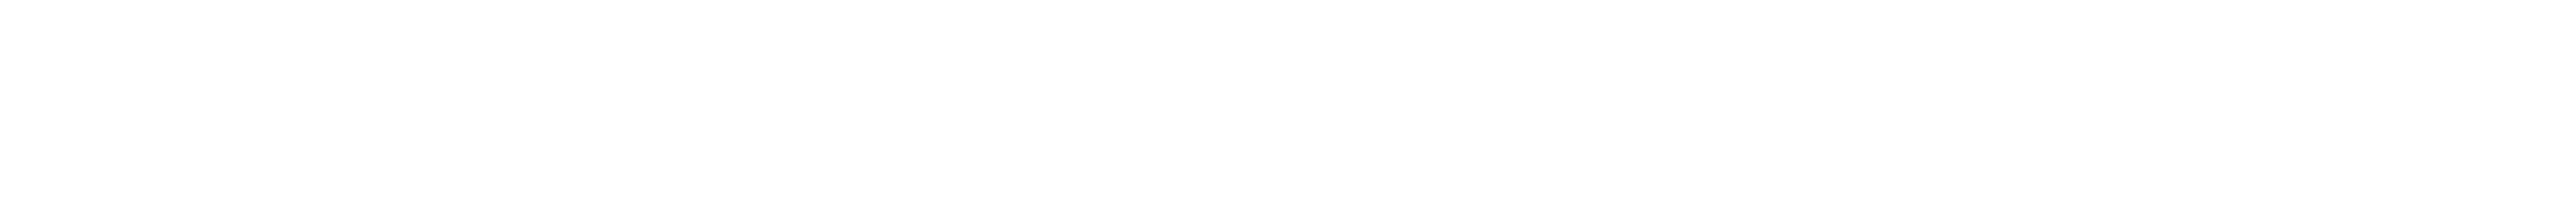 DFO Logo